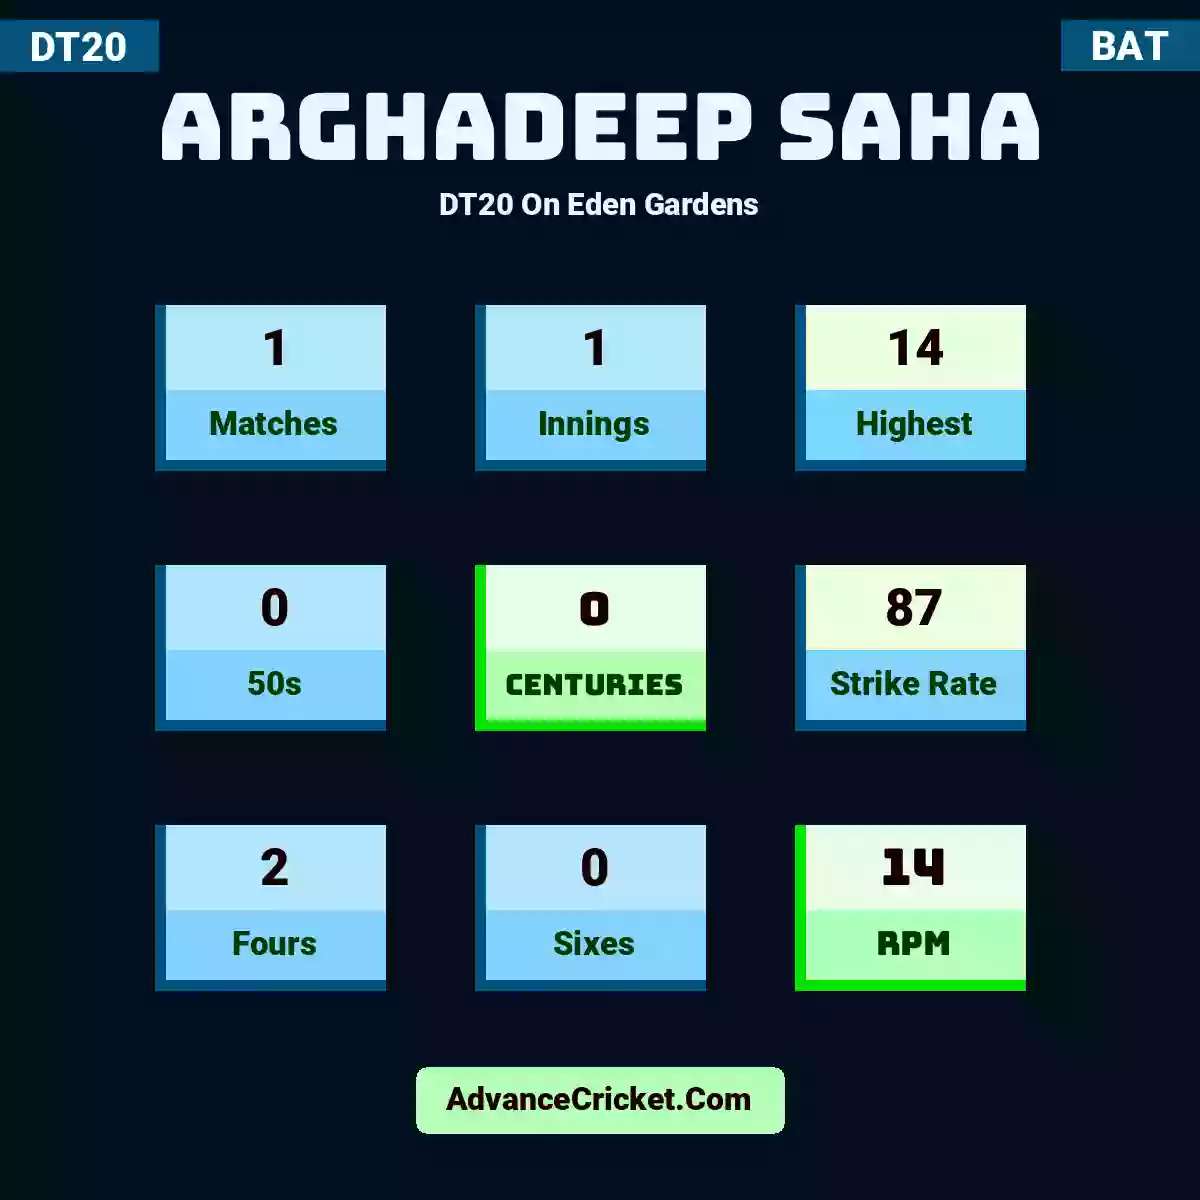 Arghadeep Saha DT20  On Eden Gardens, Arghadeep Saha played 1 matches, scored 14 runs as highest, 0 half-centuries, and 0 centuries, with a strike rate of 87. A.Saha hit 2 fours and 0 sixes, with an RPM of 14.